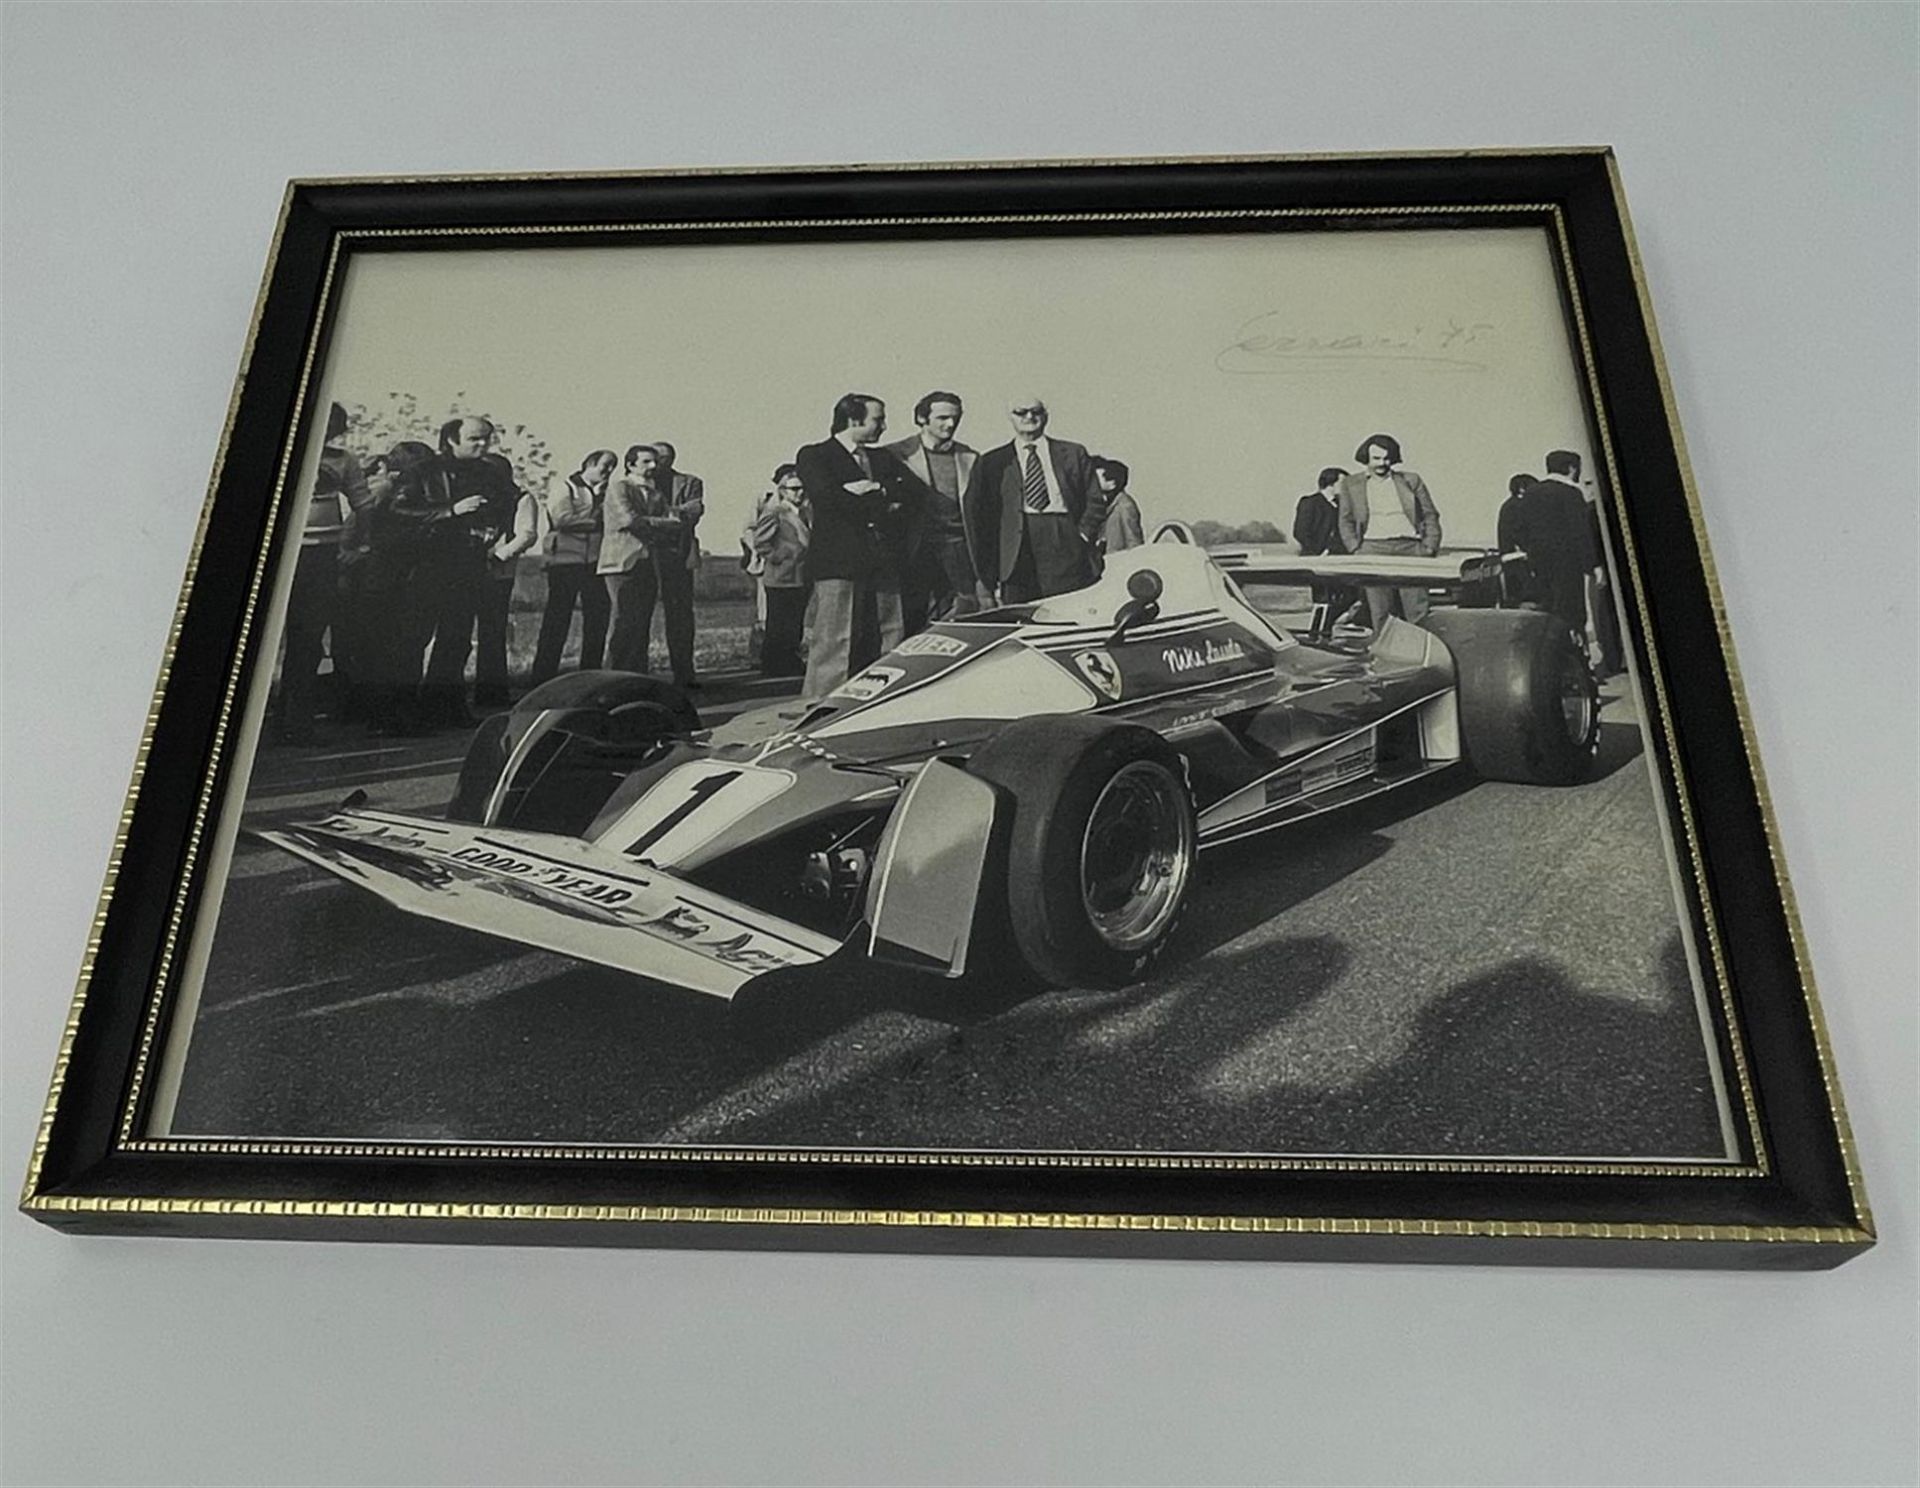 "The Team" Enzo, Lauda and Regazzoni with the Ferrari 312T - Image 2 of 3